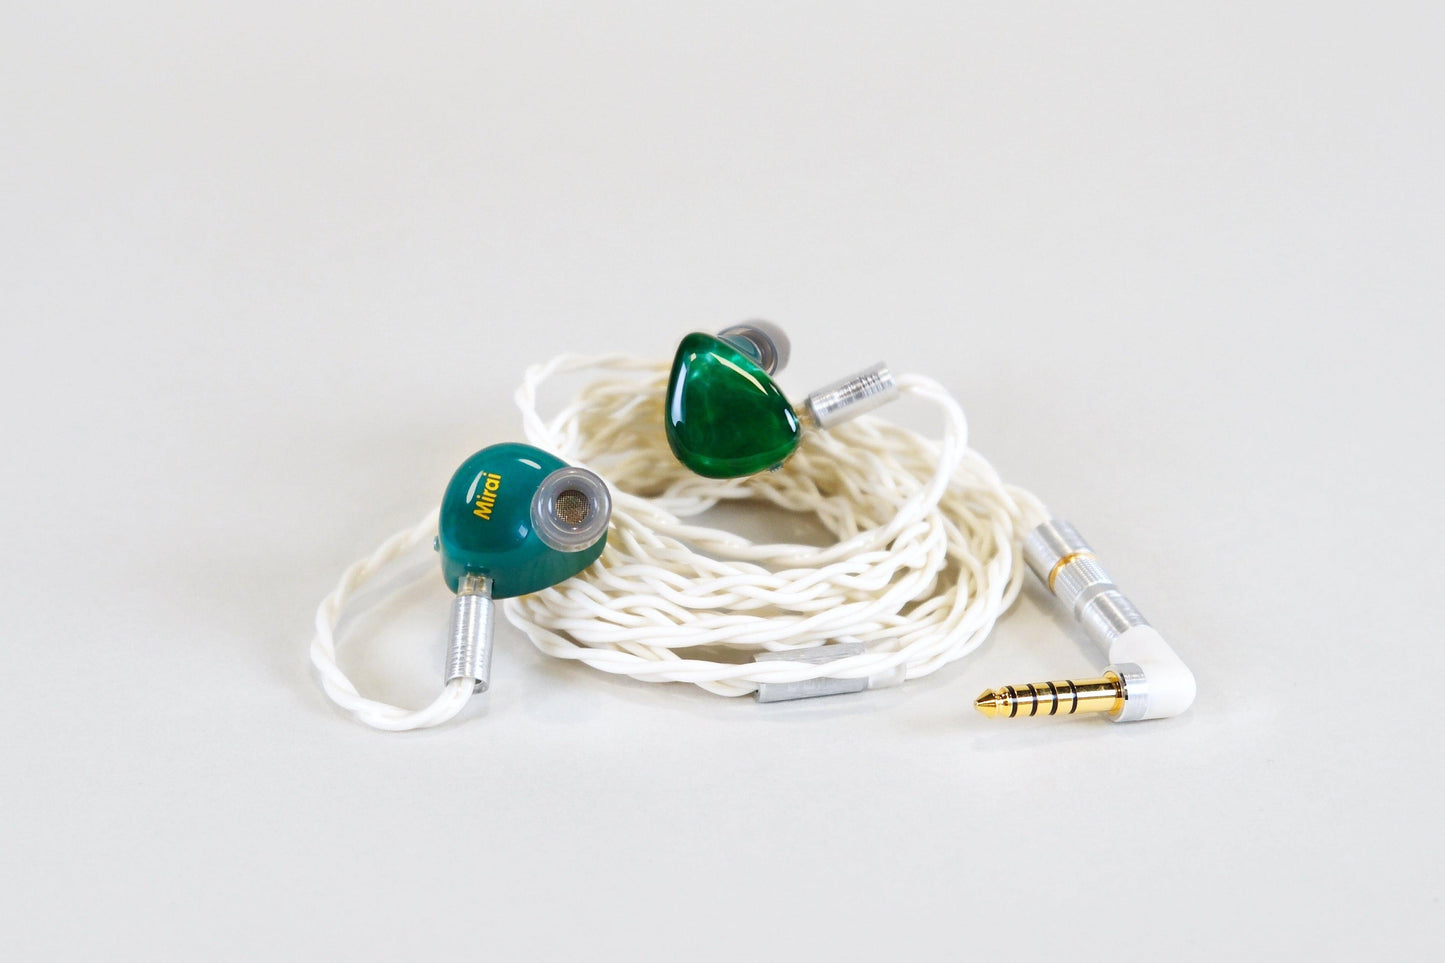 Dunu Mirai In-Ear Headphones Headphones Dunu 